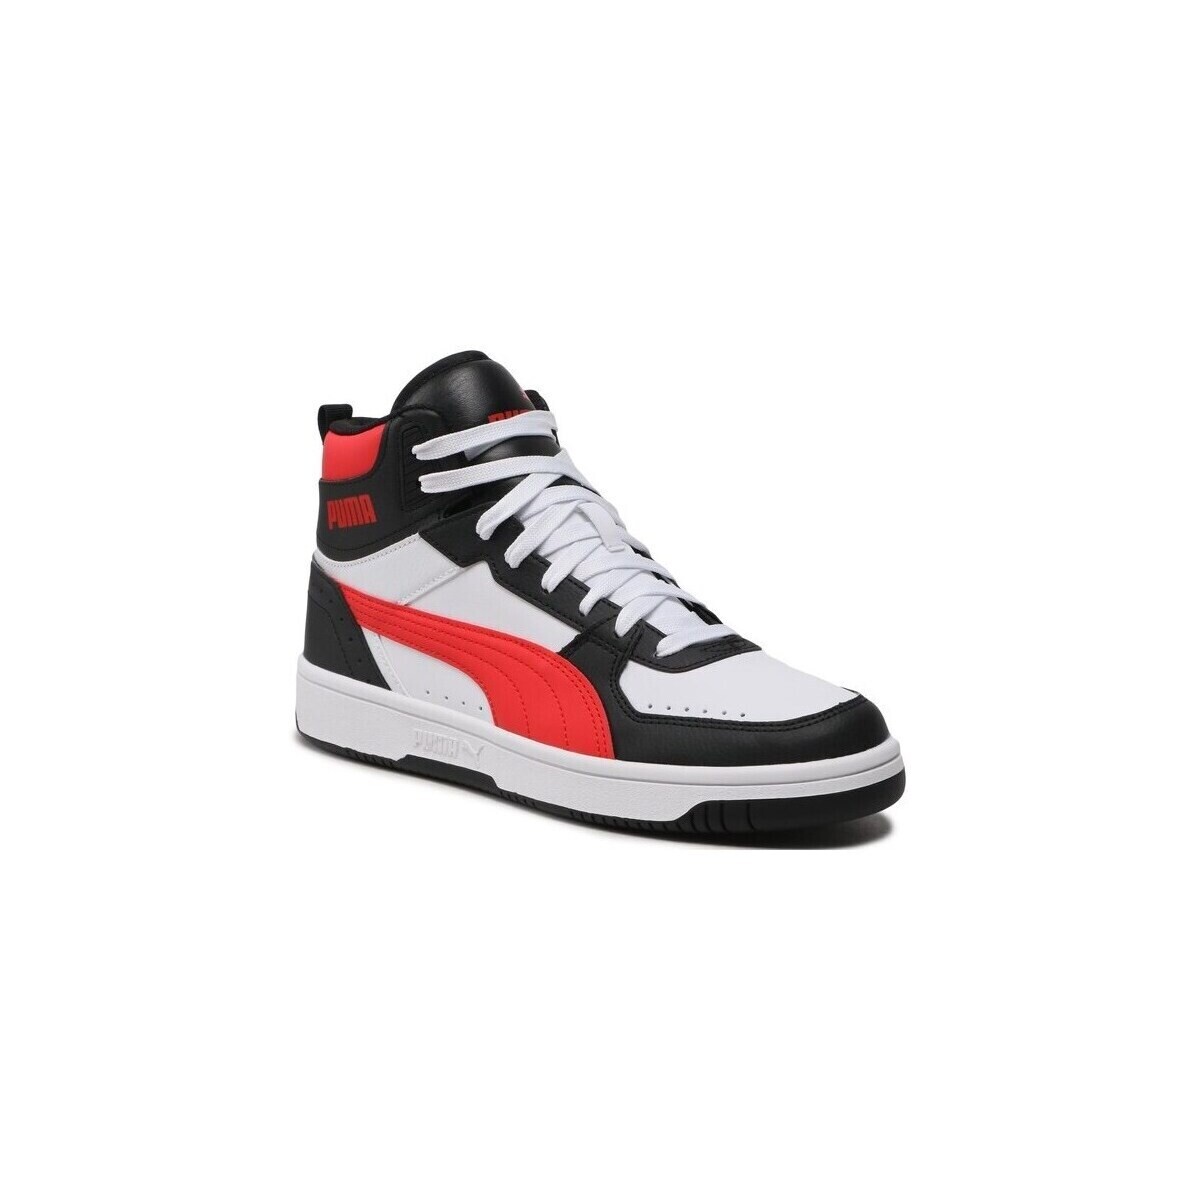 Pantofi Bărbați Pantofi sport stil gheata Puma Rebound Joy Alb, Negre, Roșii